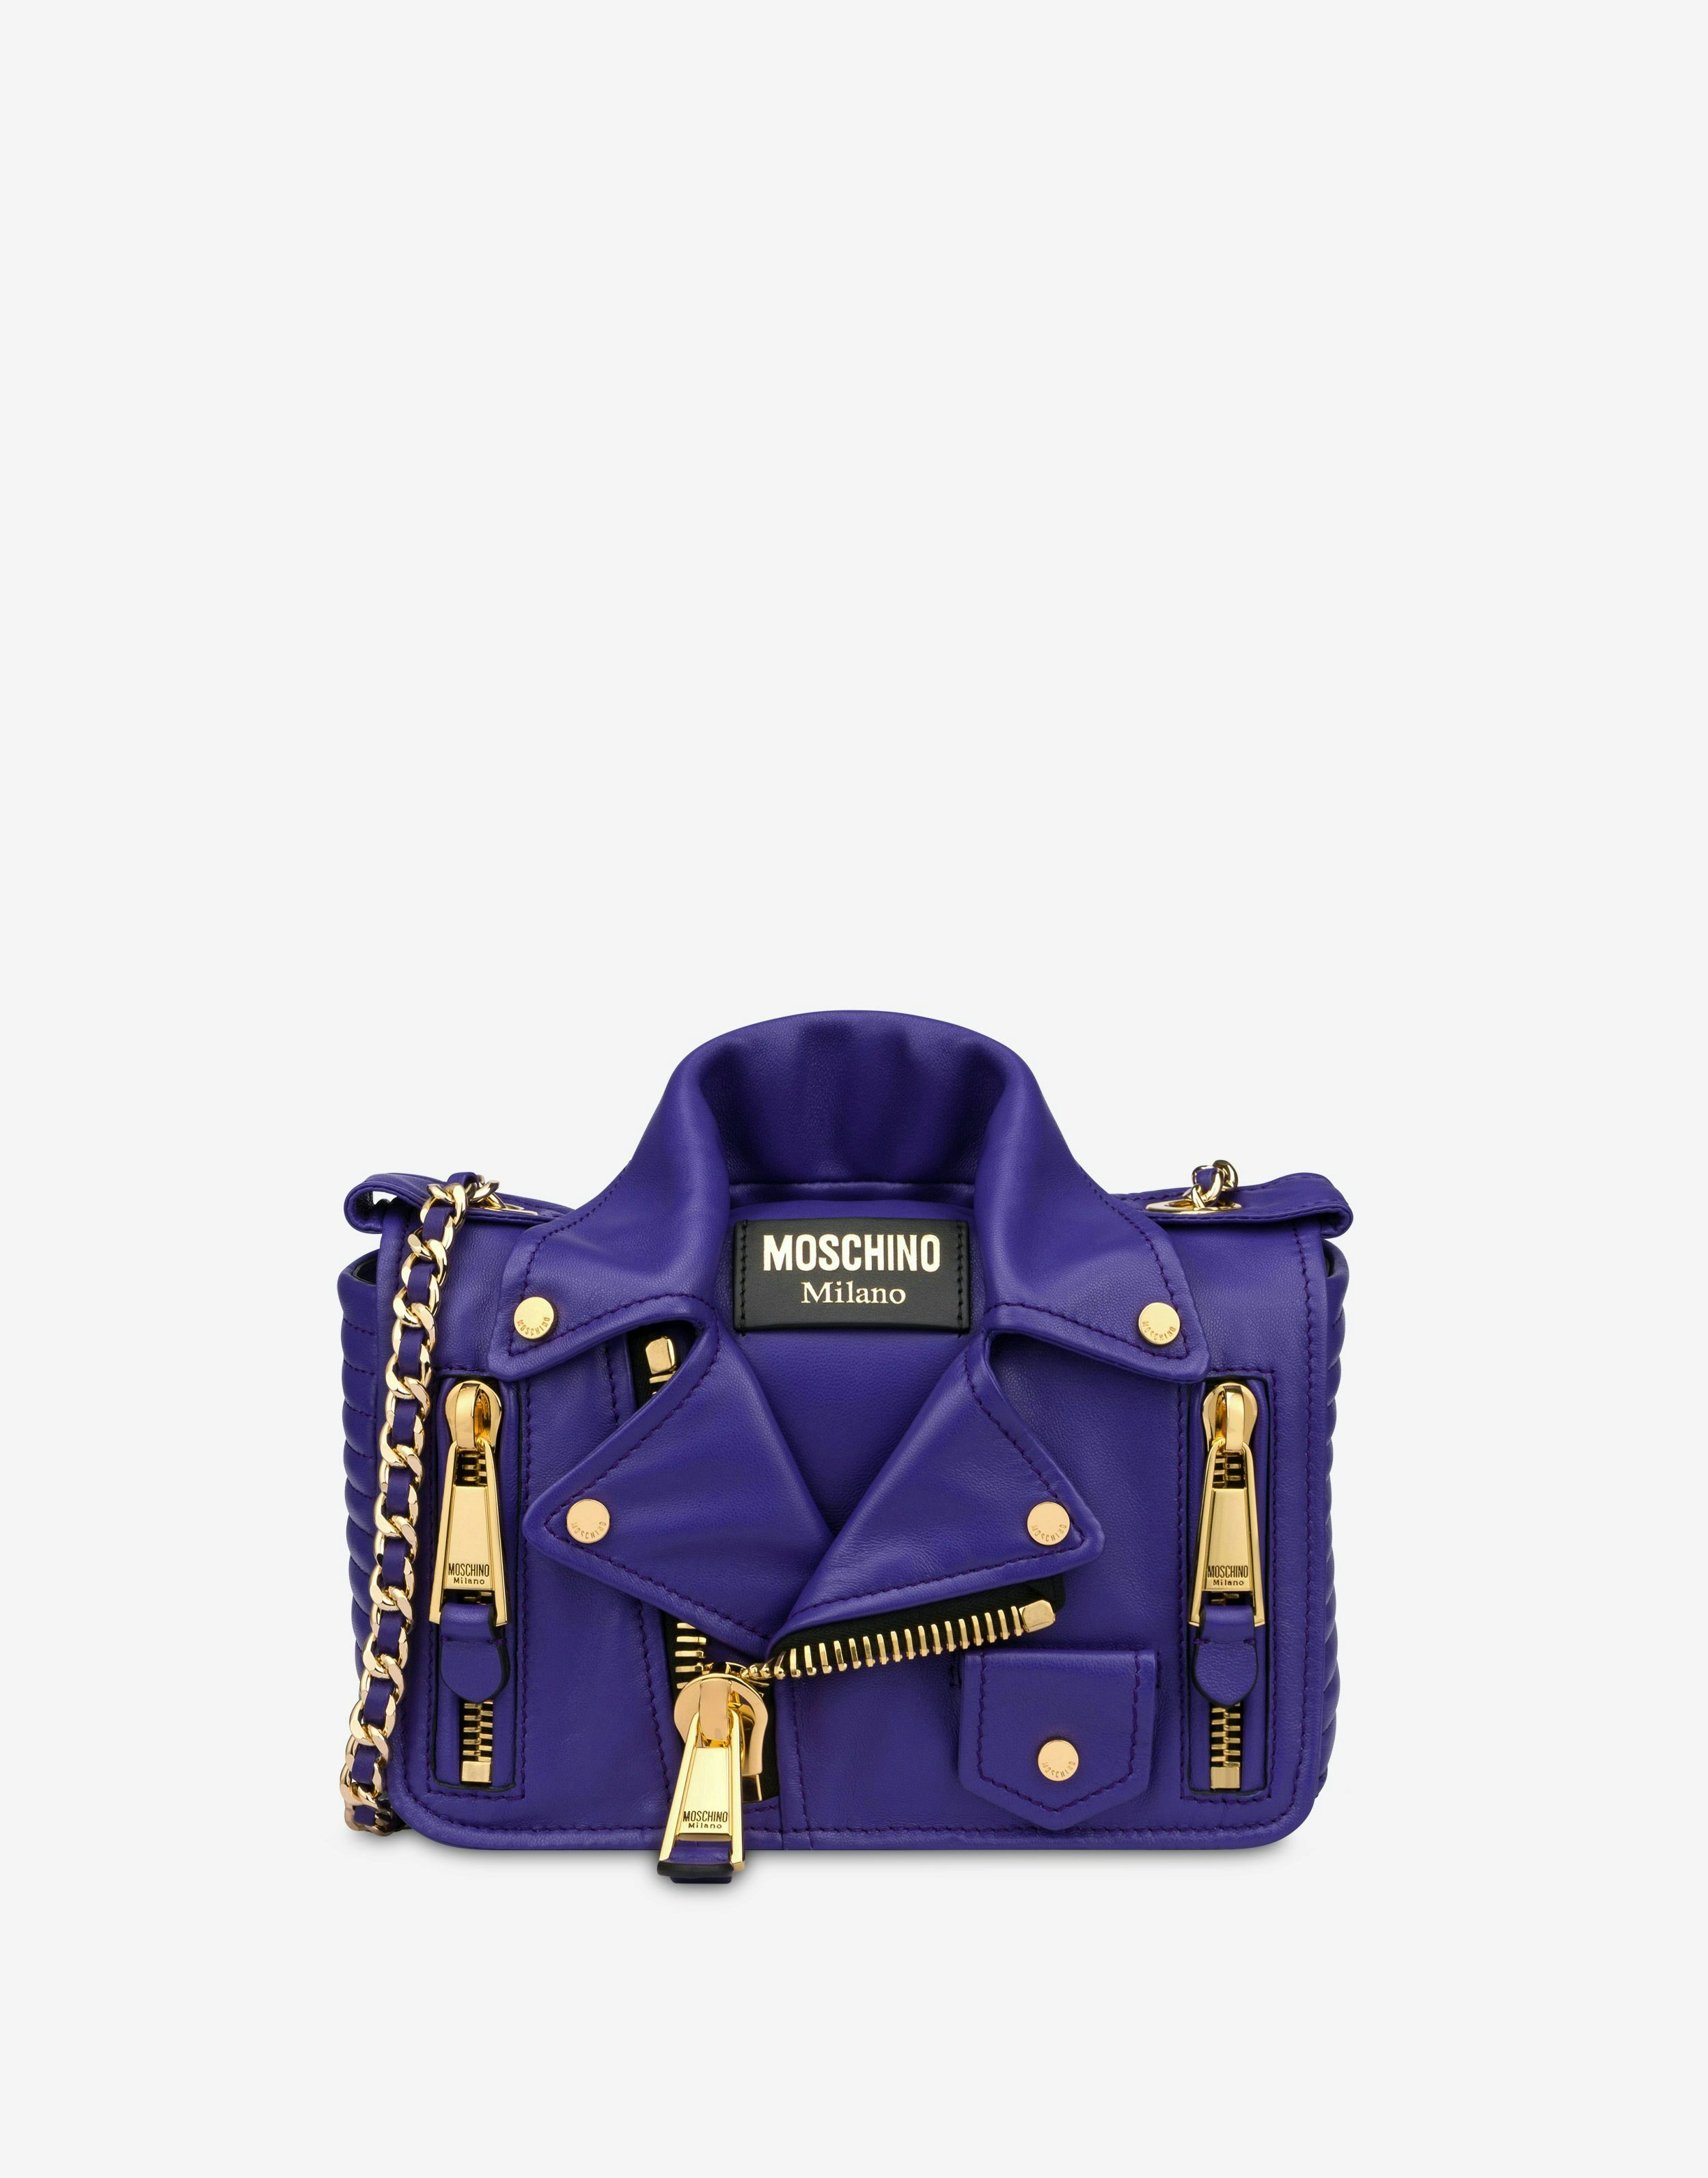 Moschino Bags Women | Moschino Official Store